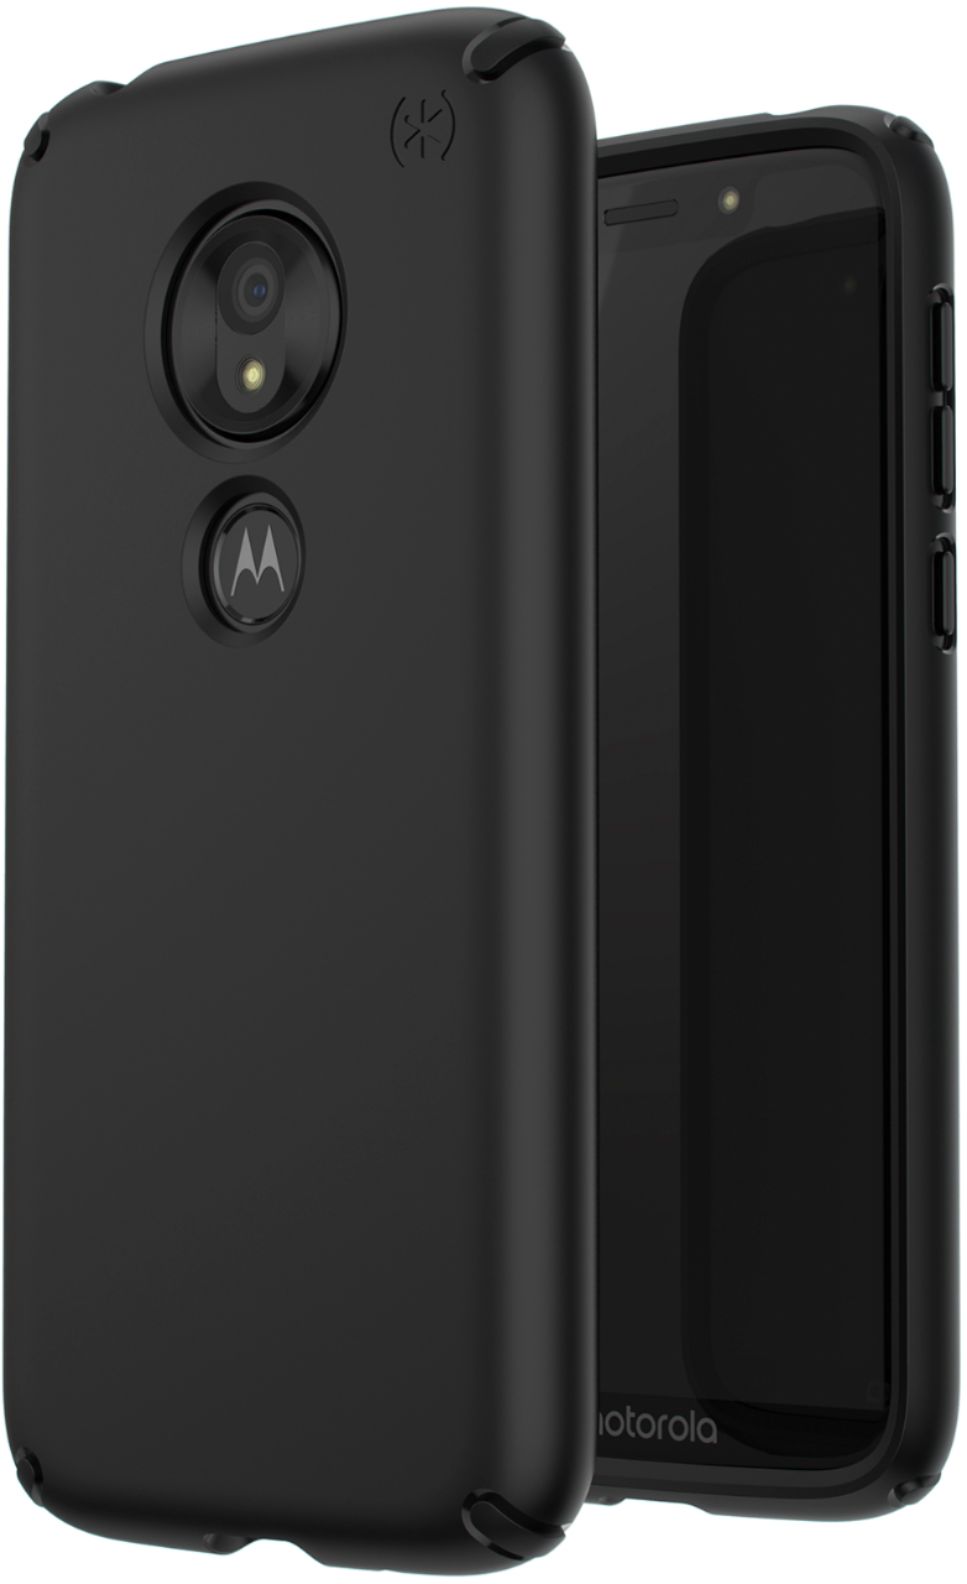 Customer Reviews: Speck Presidio LITE Case for Motorola Moto G7 Play ...